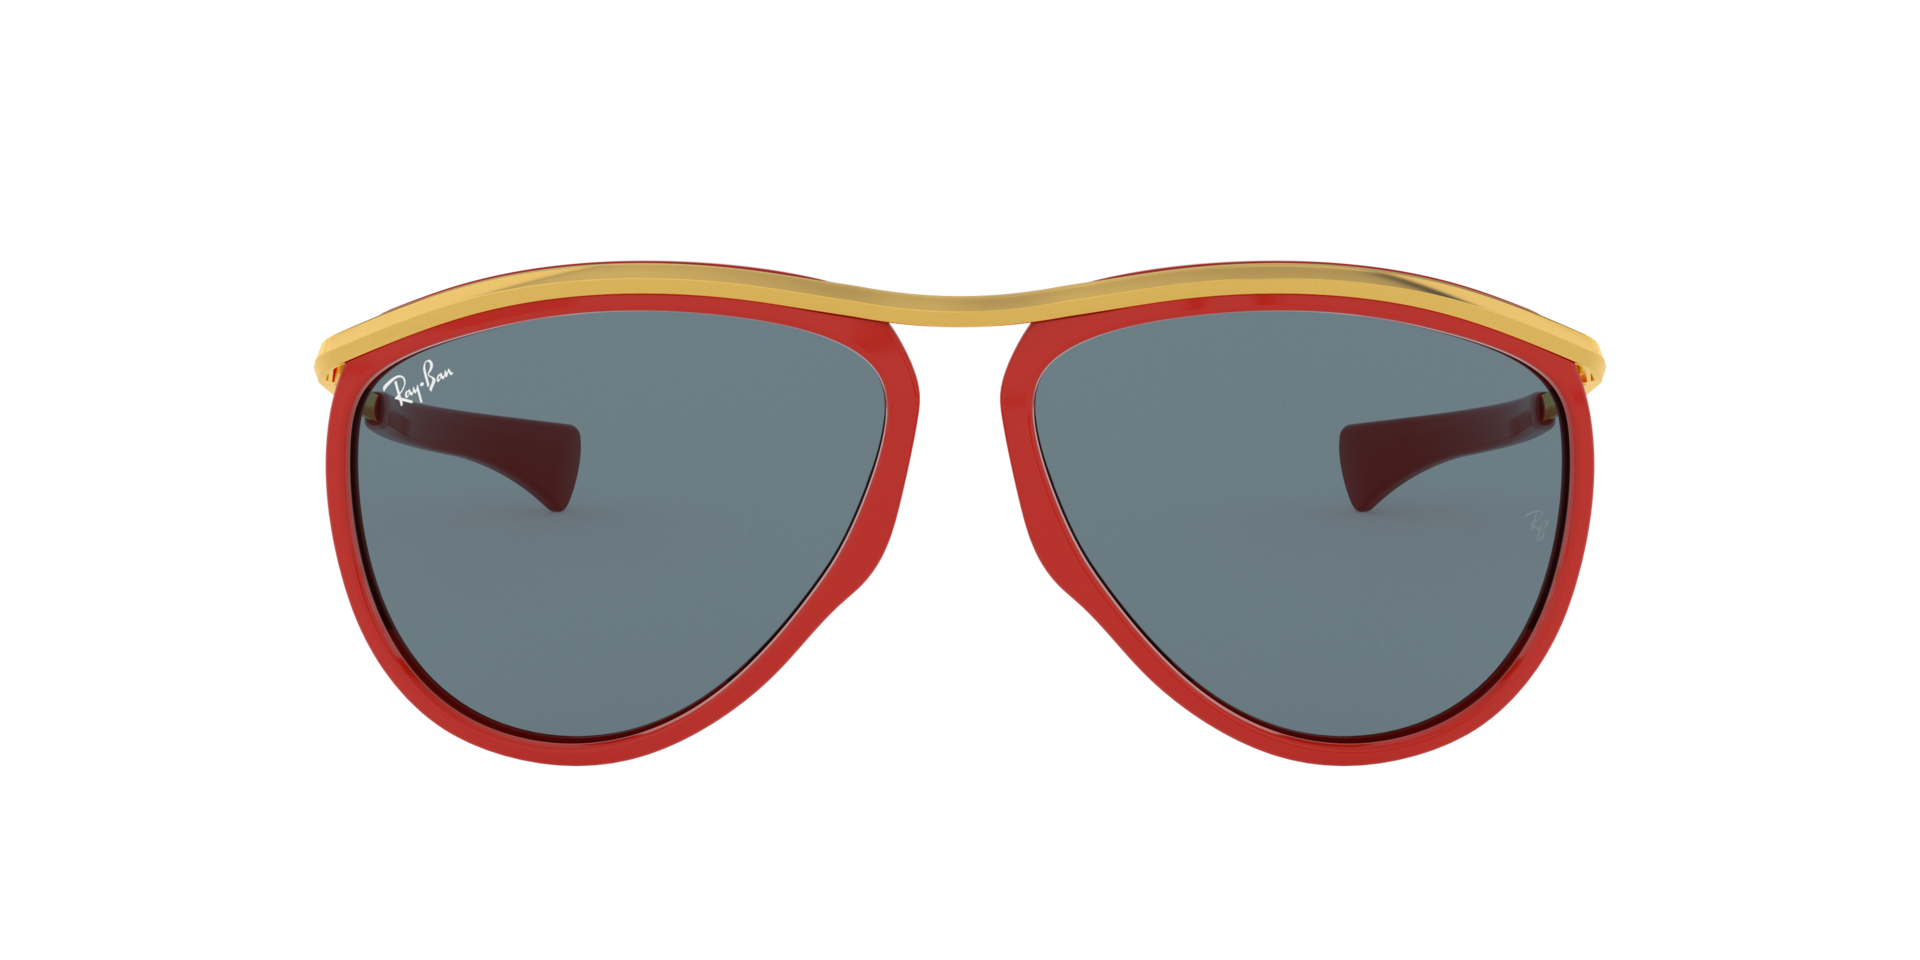 Buy Olympian Aviator Sunglasses Online at Ray-Ban